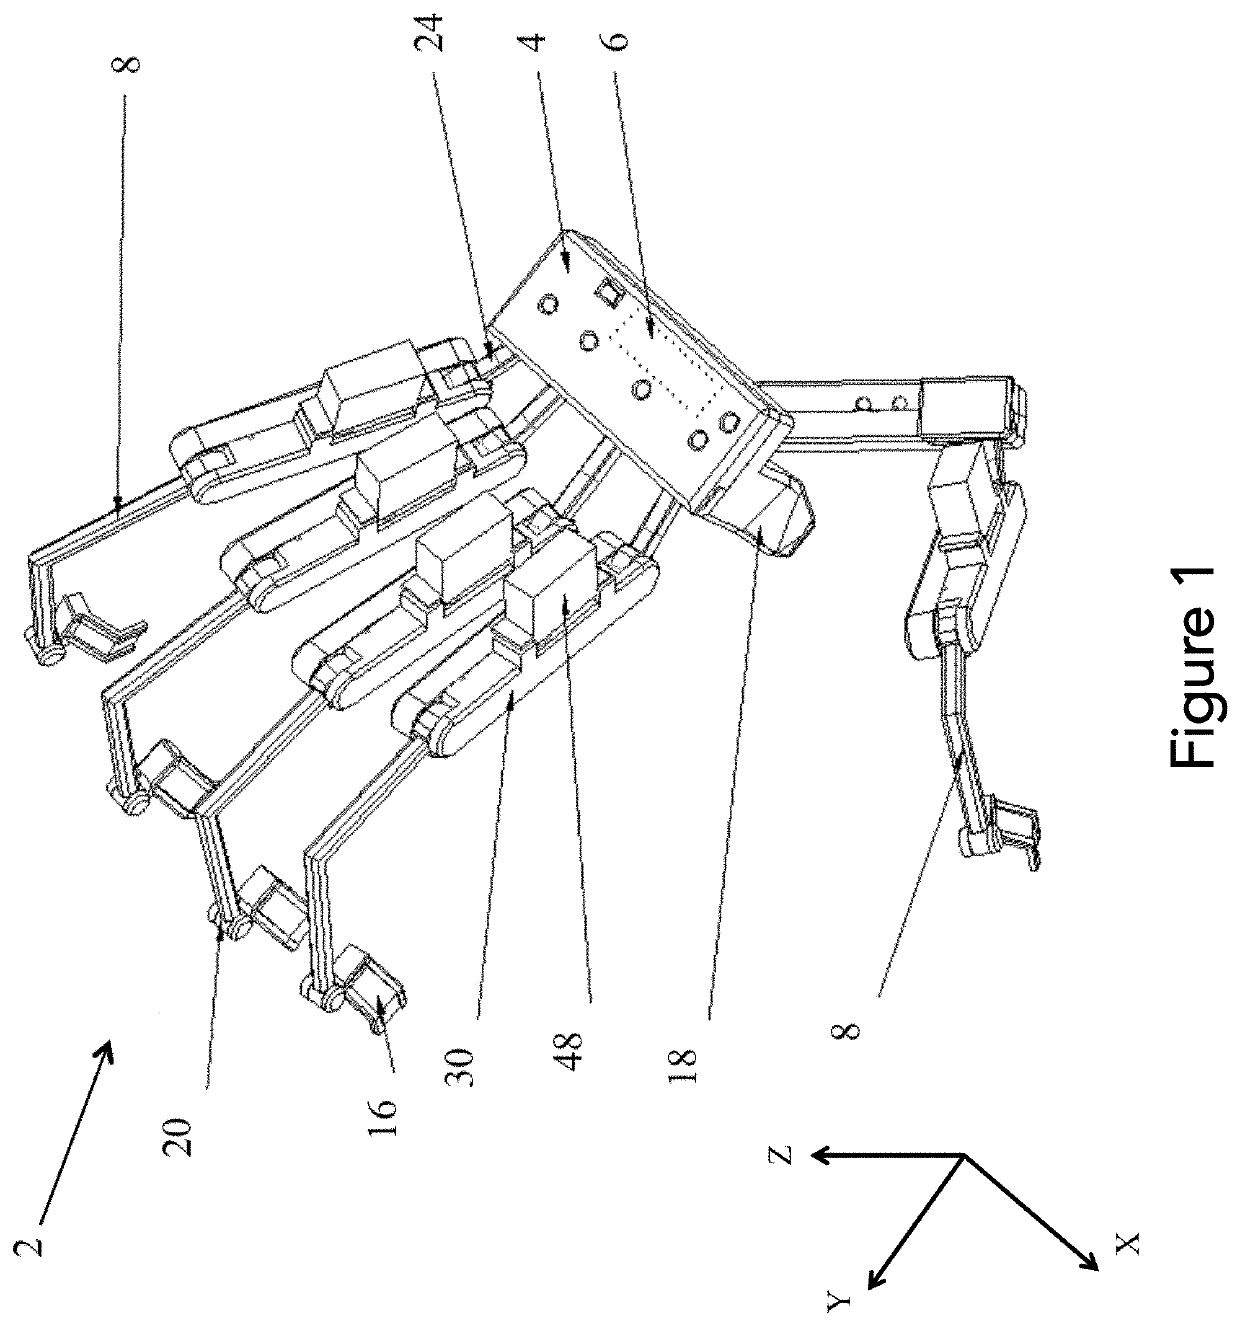 Hand exoskeleton force feedback system